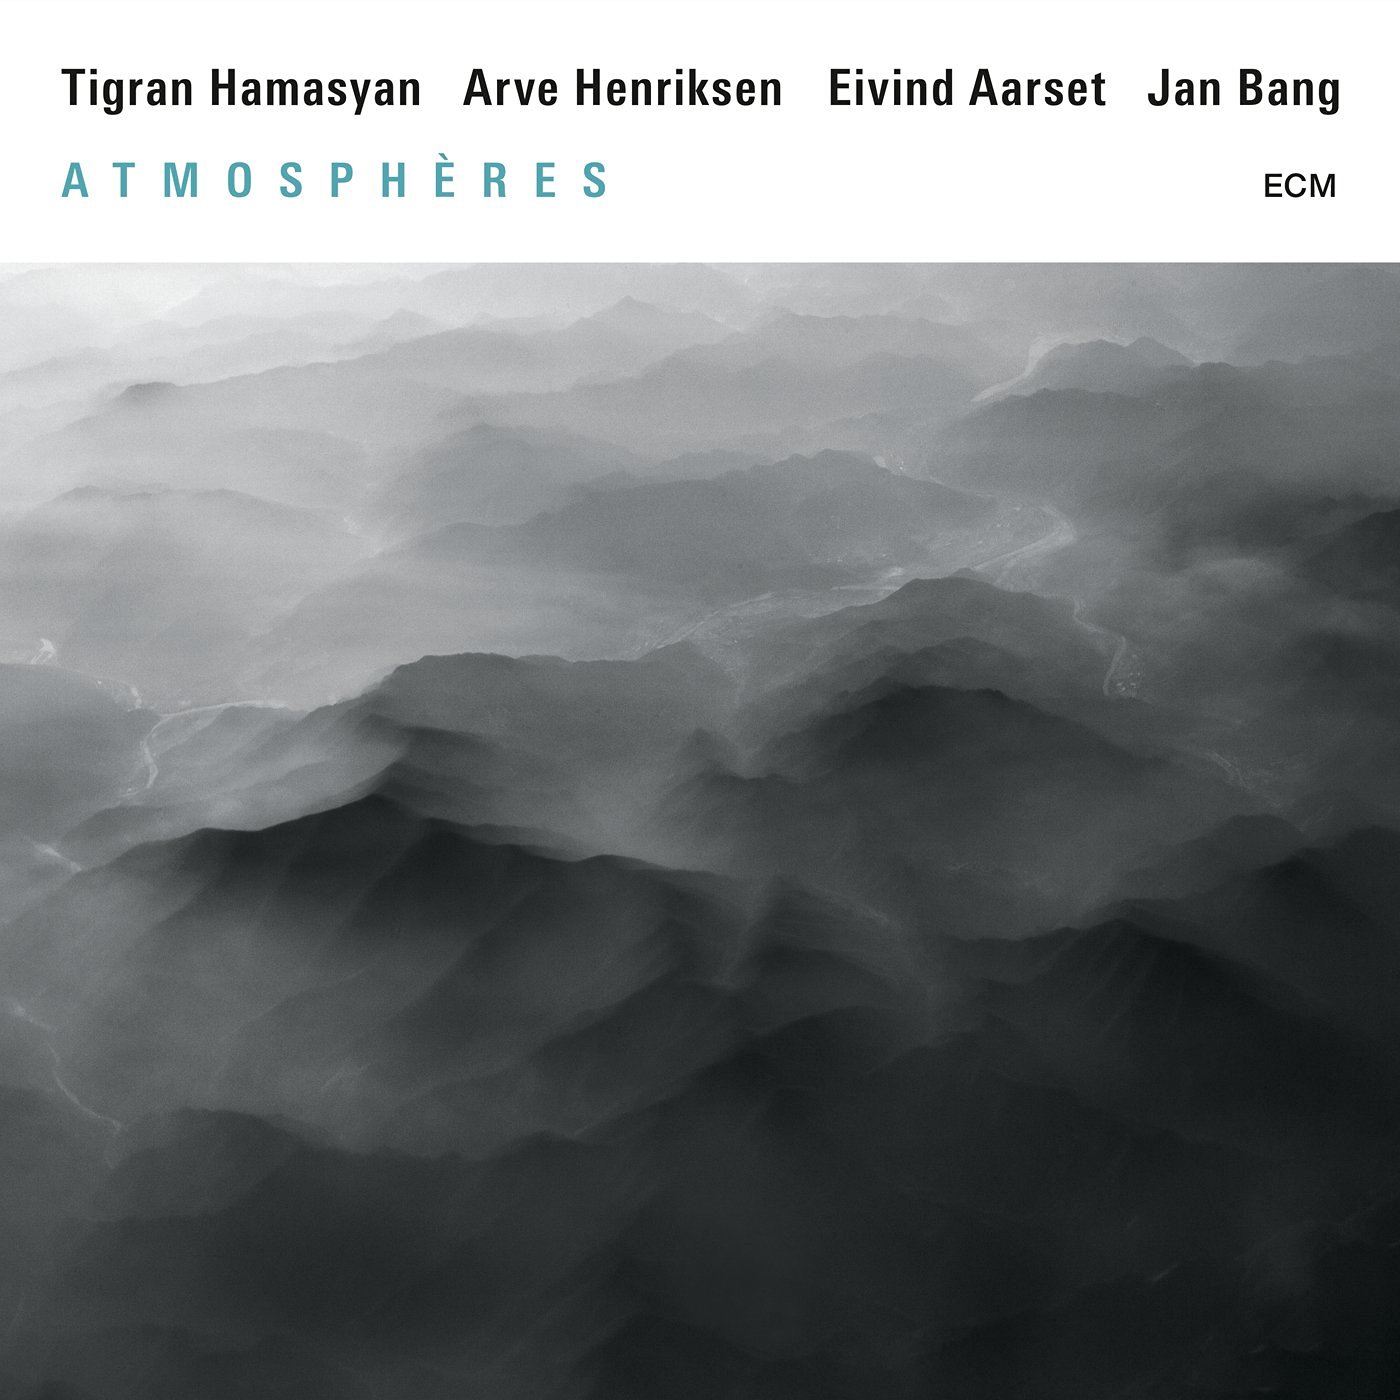 Atmospheres | Arve Henriksen, Eivind Aarset, Jan Bang Tigran Hamasyan